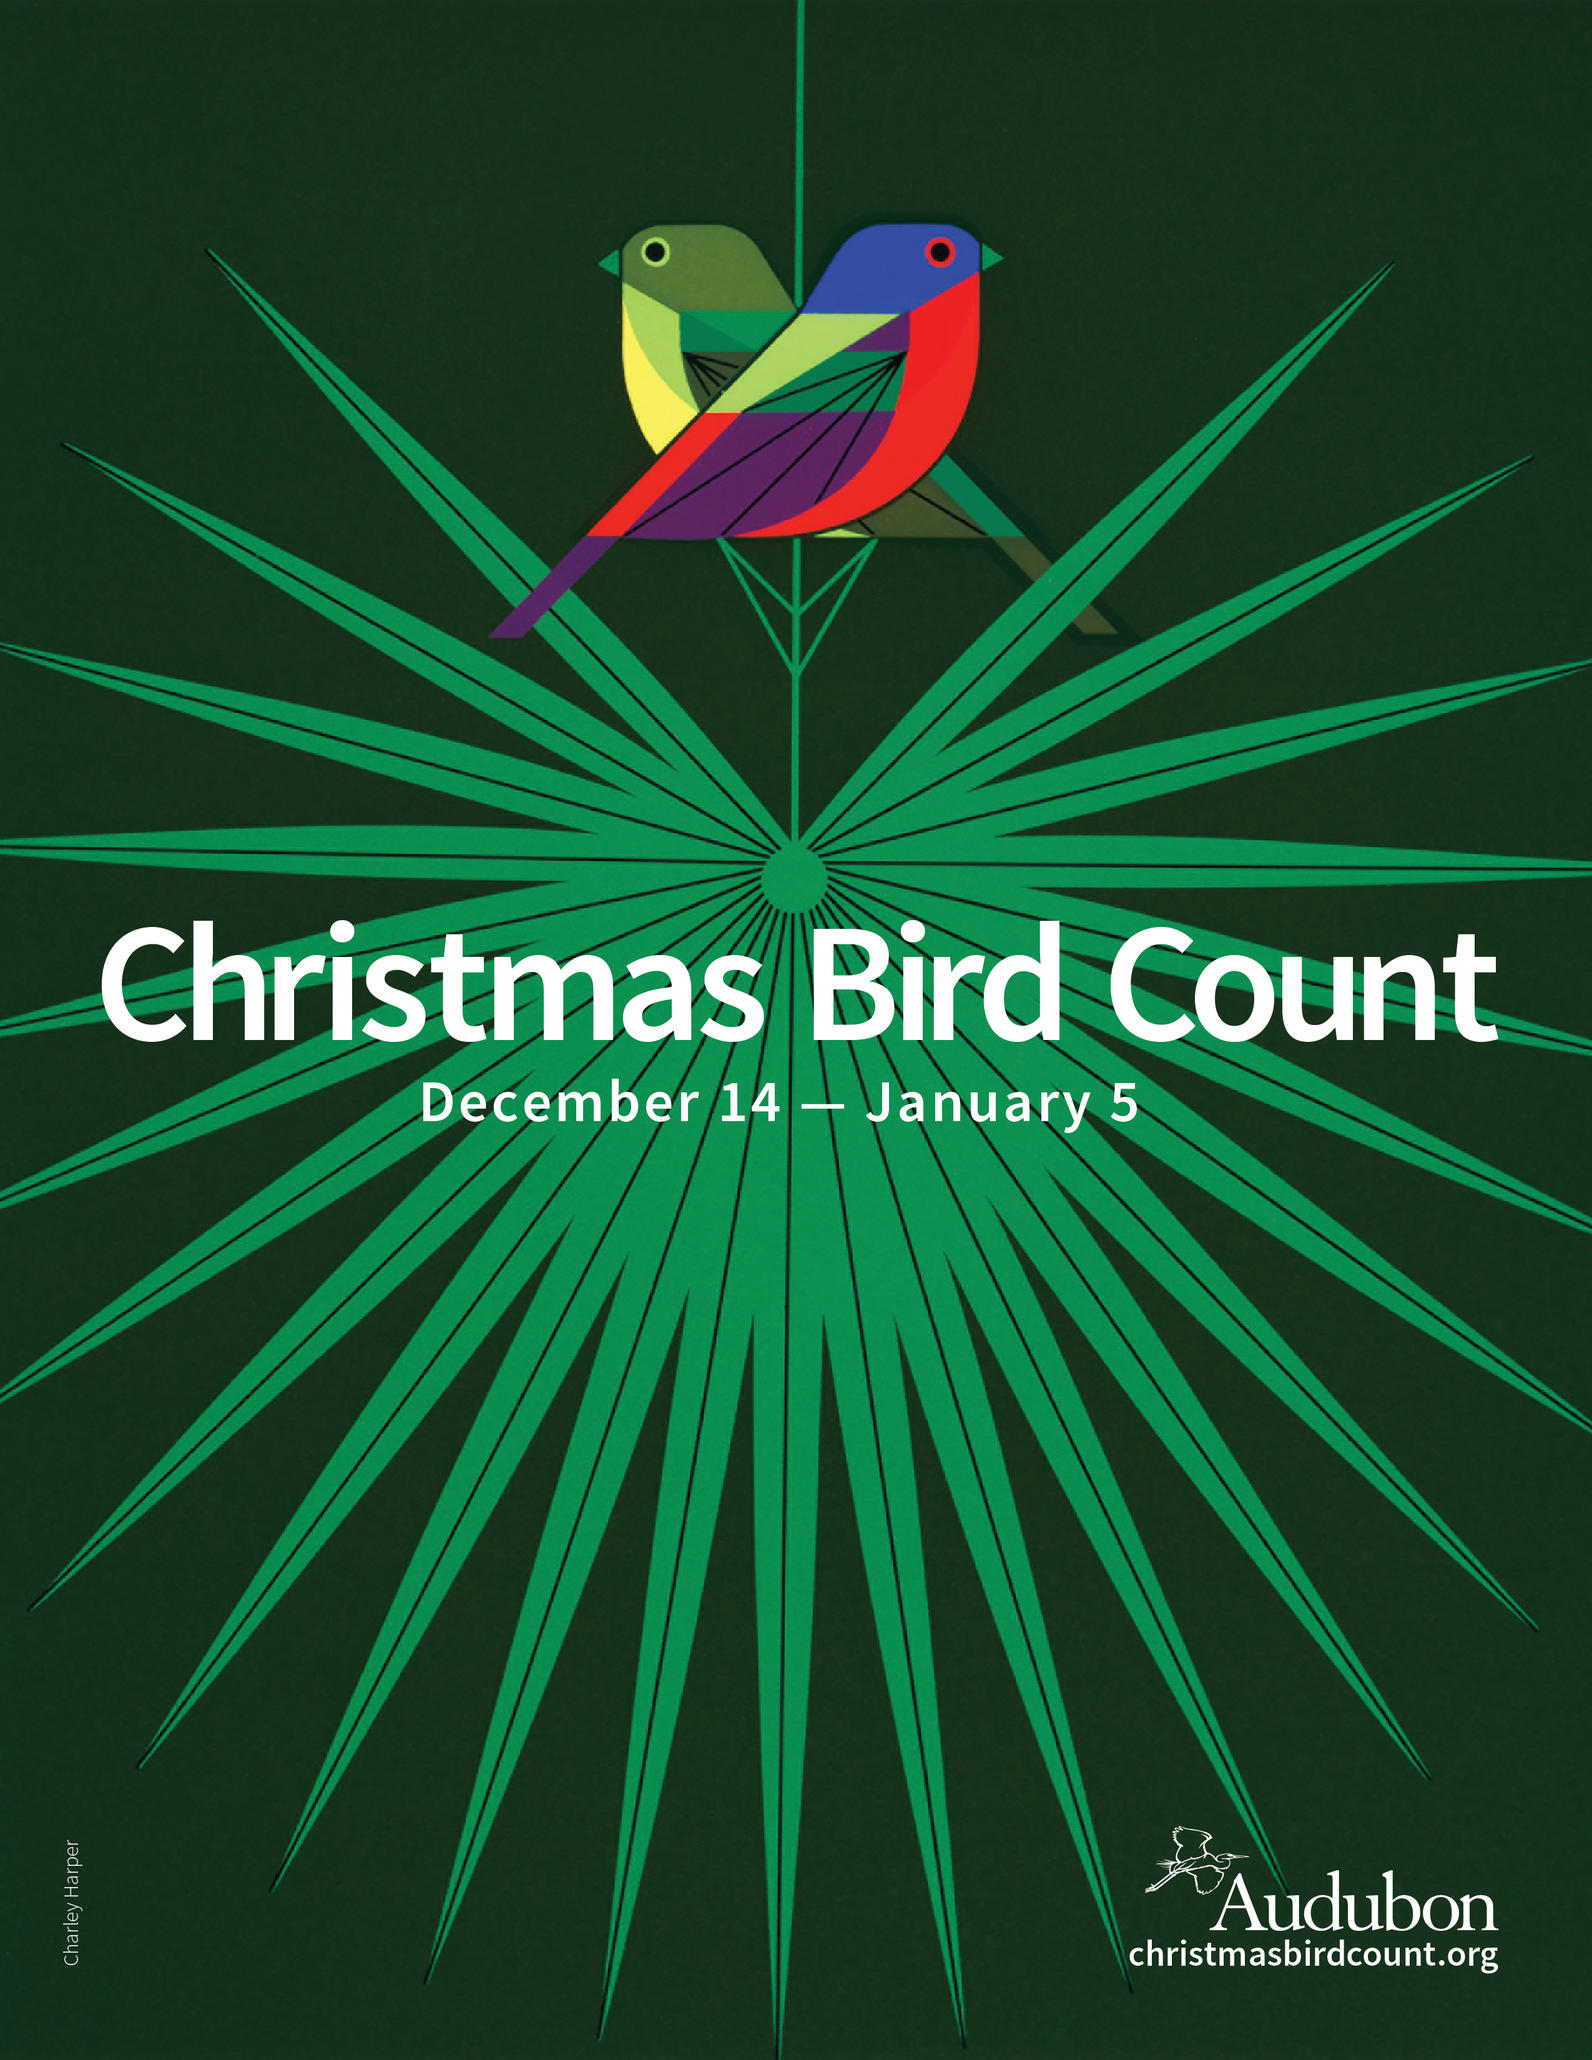 Audubon Christmas Bird Count